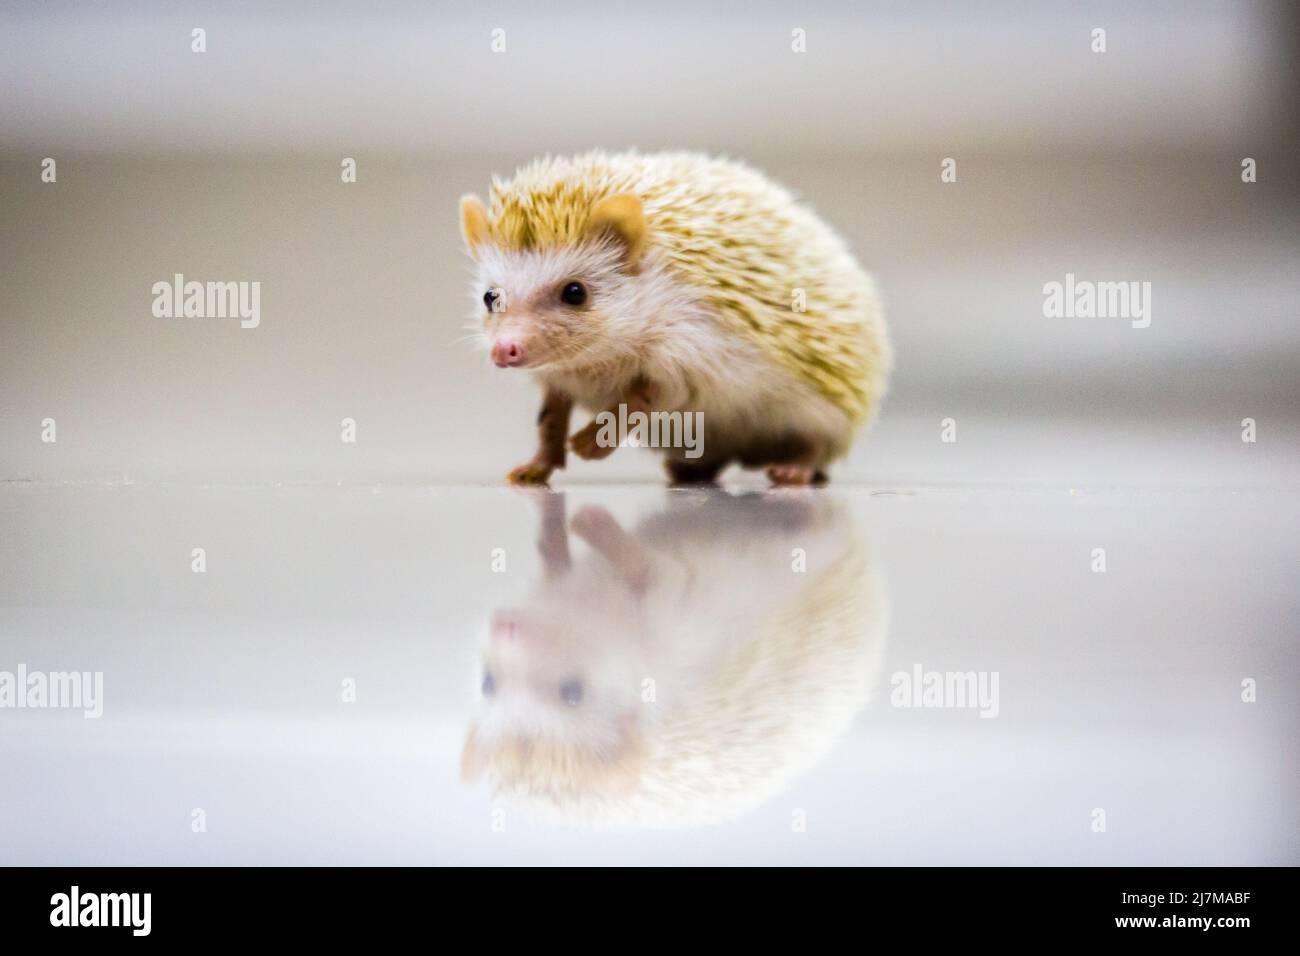 Baby hedgehog cute on floor Stock Photo